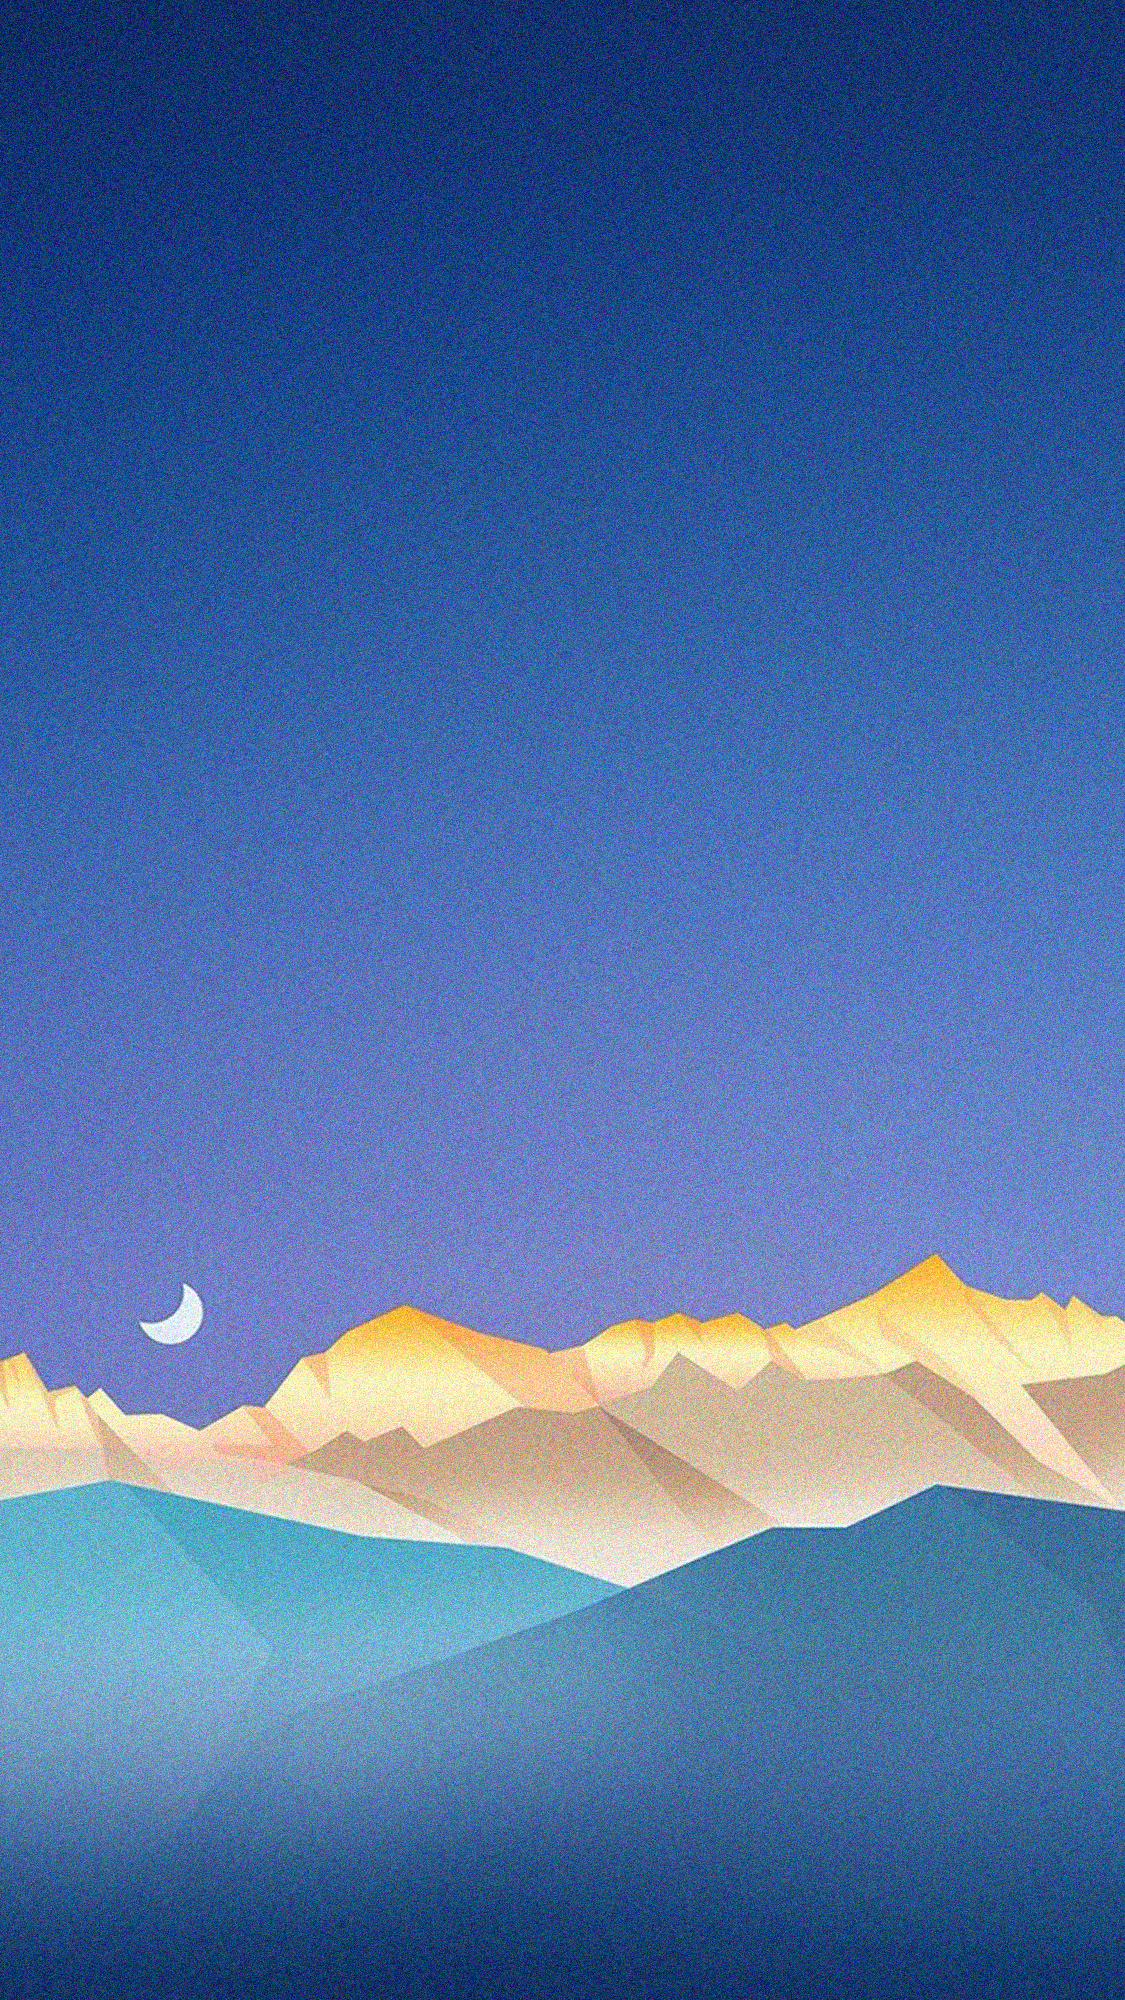 Sky over mountains anime wallpaper